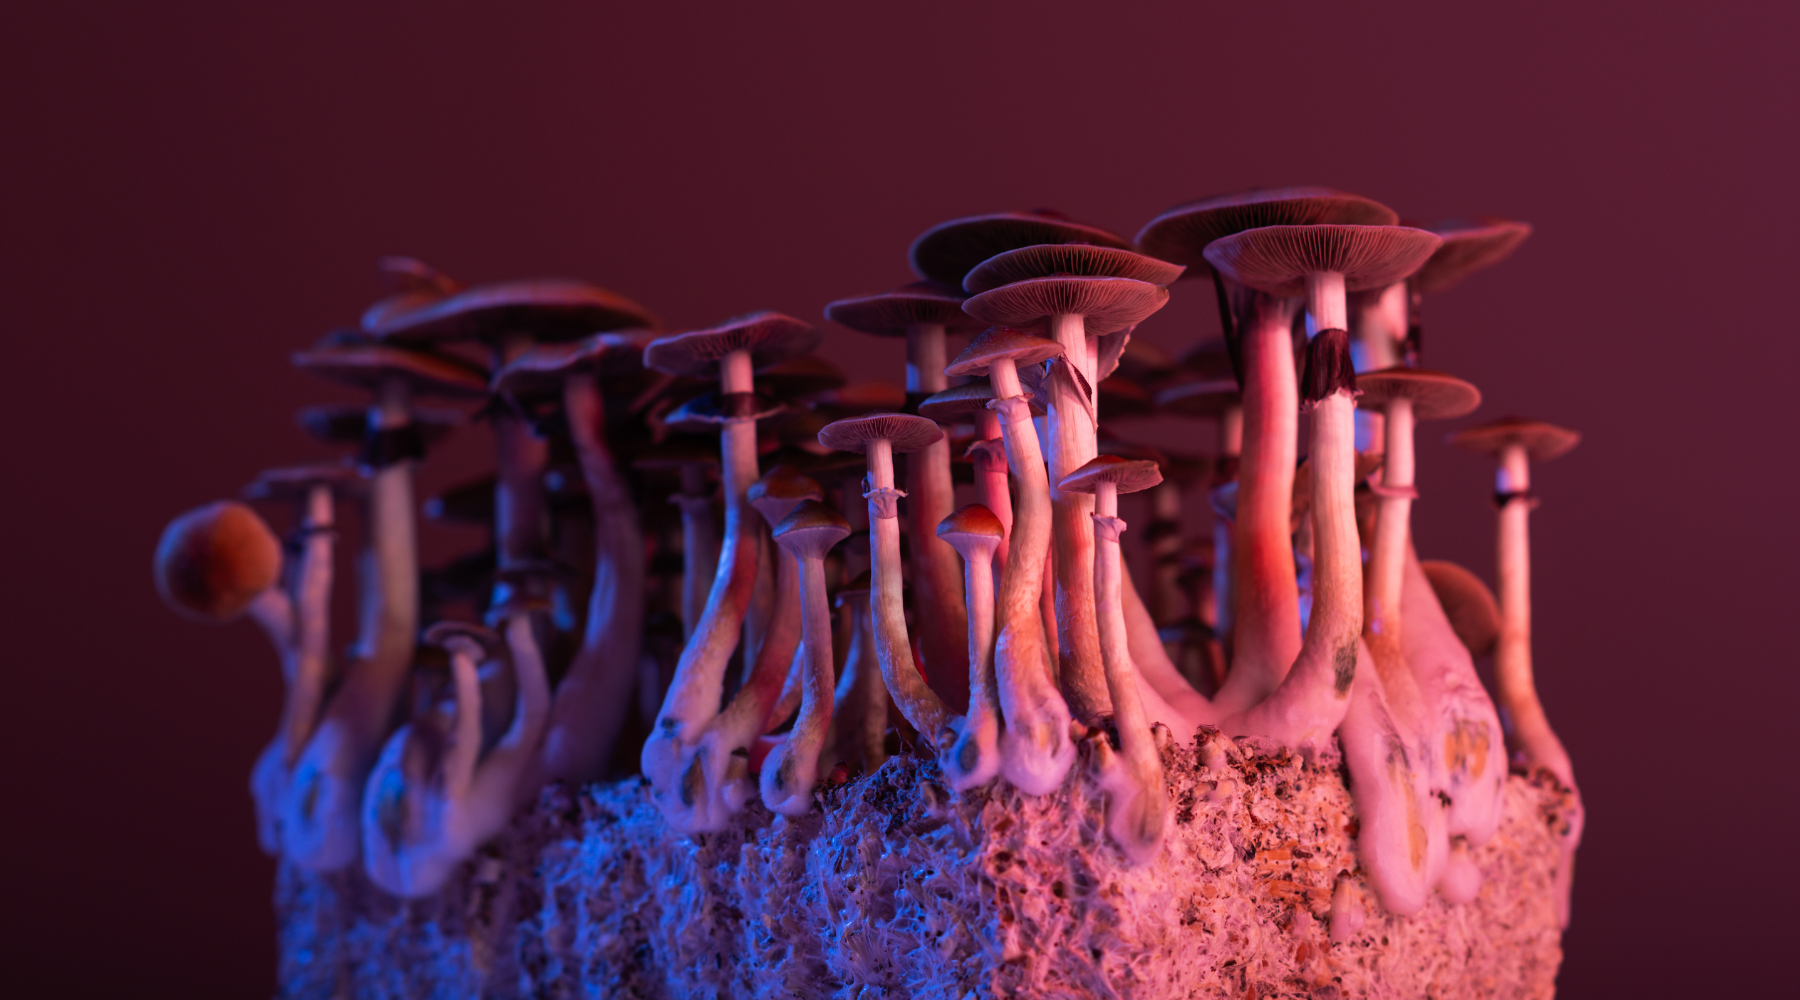 golden teacher mushroom growing on block with lighting